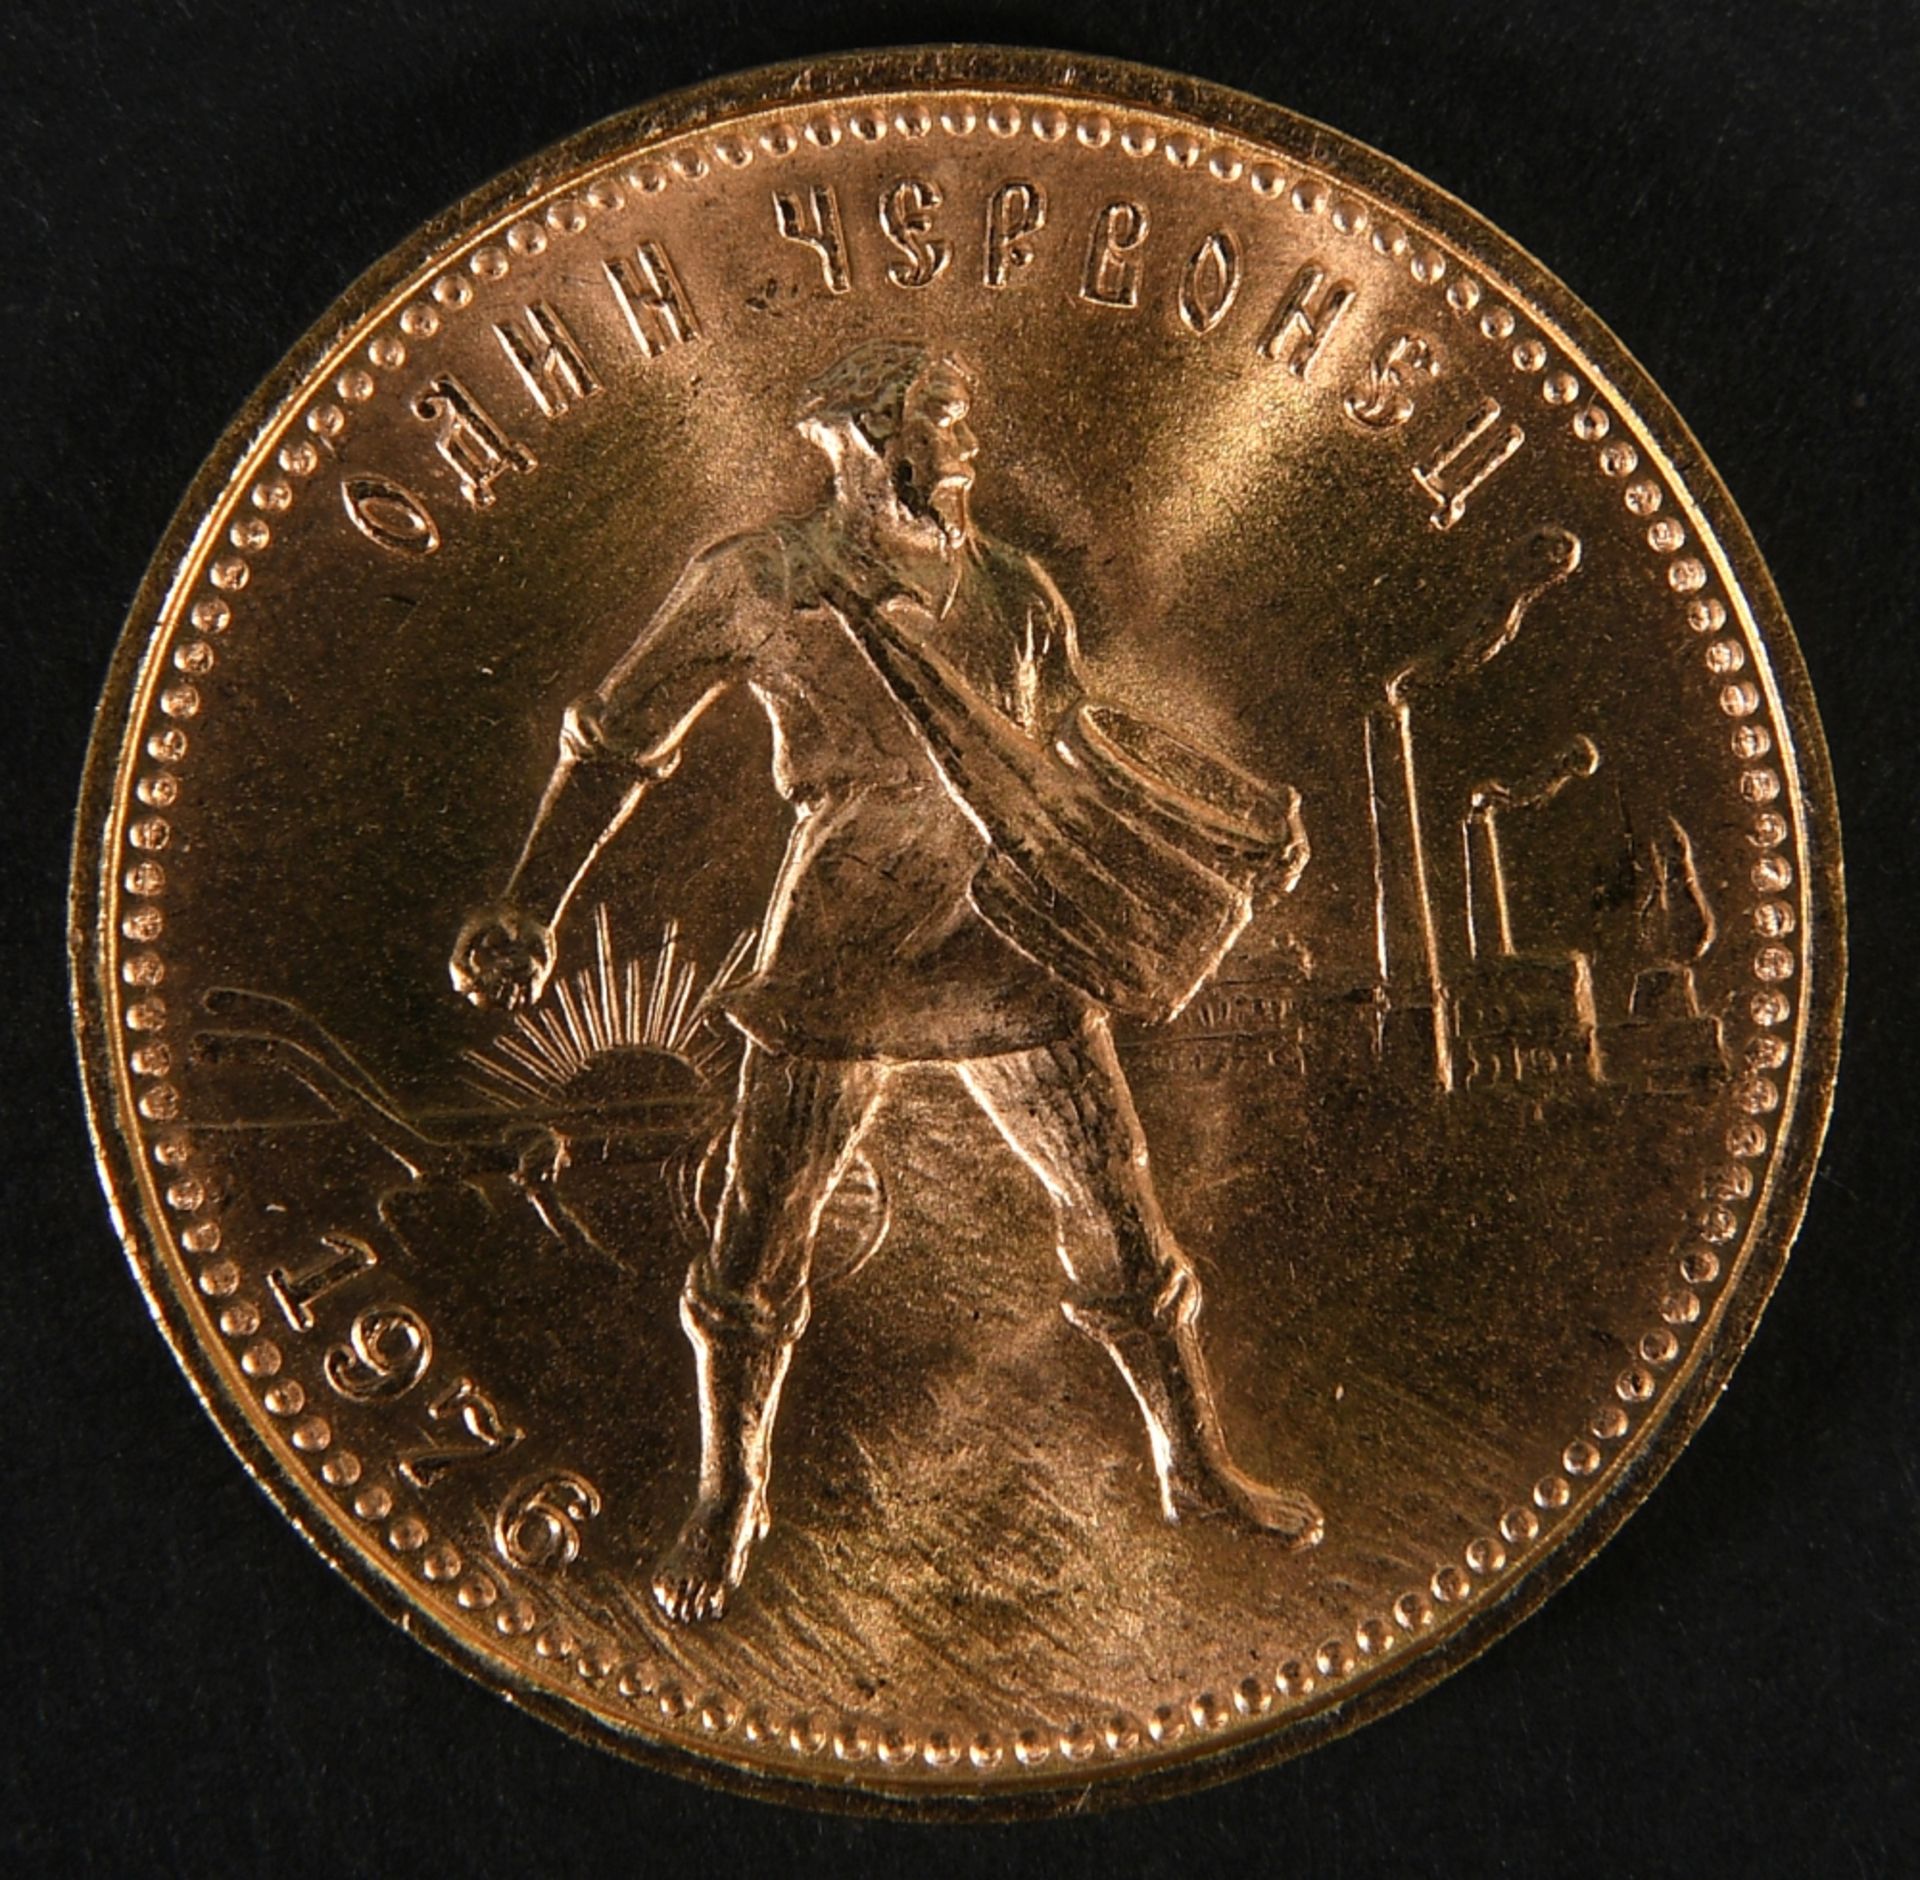 Münze - Goldmünze "10 Rubel 1976" - Image 2 of 3